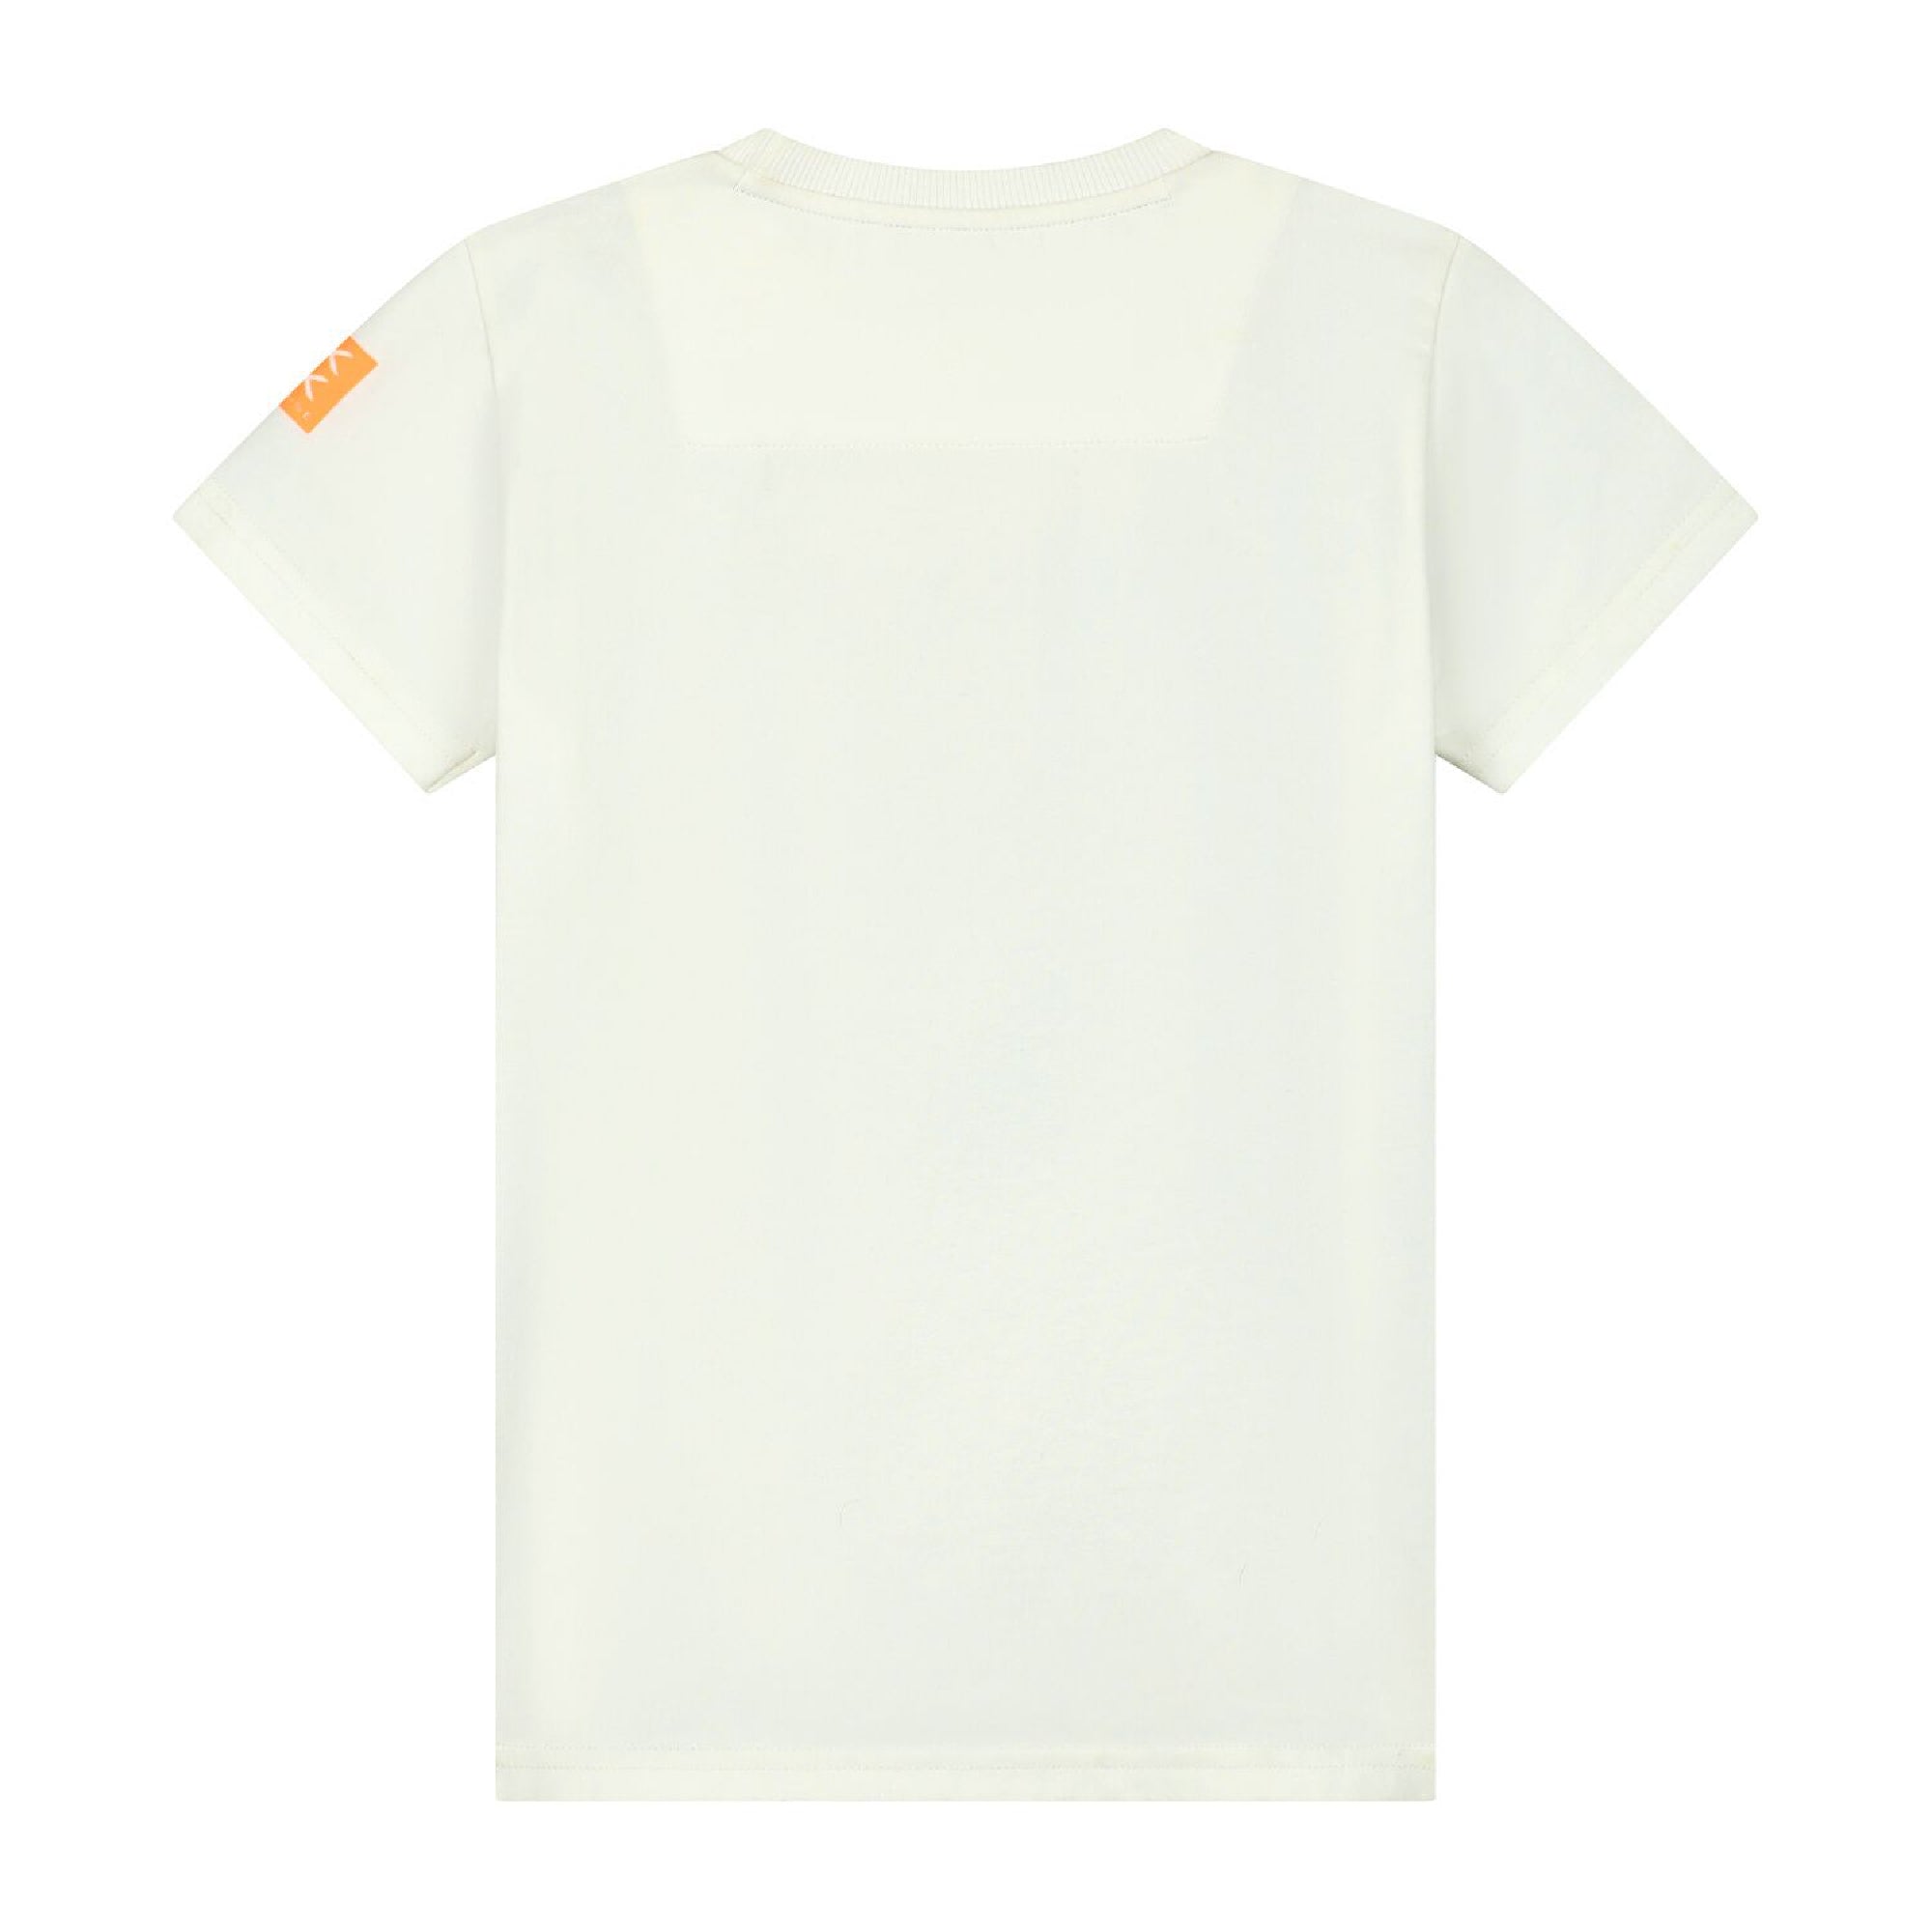 Skurk T-shirt Thierry White